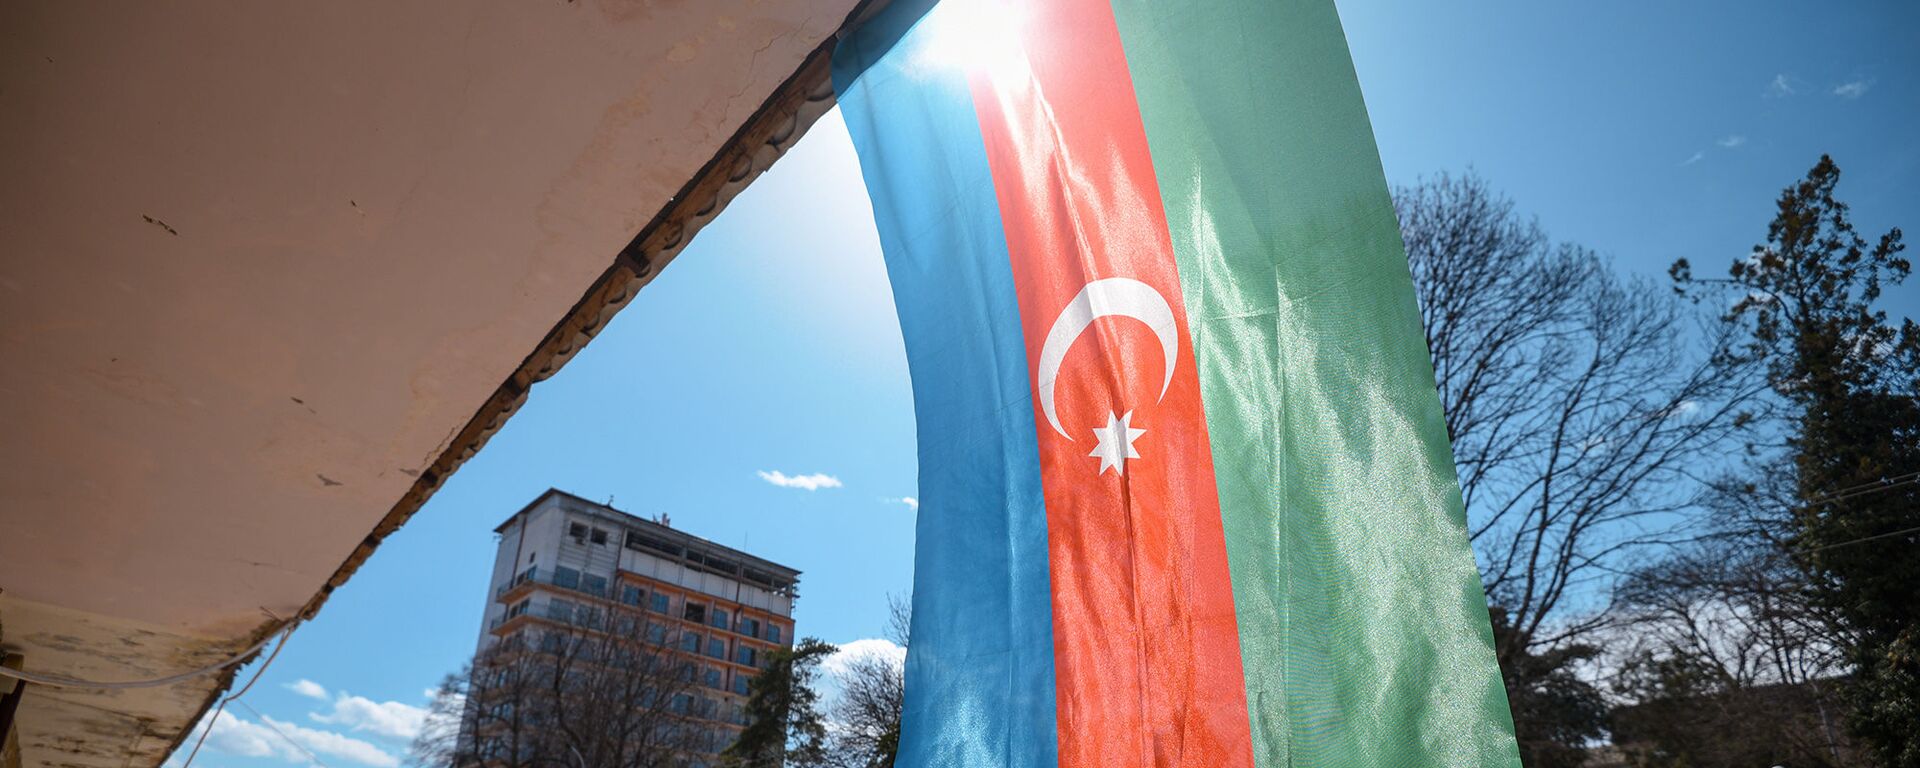 Флаг Азербайджана на одном из зданий в Шуше - Sputnik Азербайджан, 1920, 08.11.2021